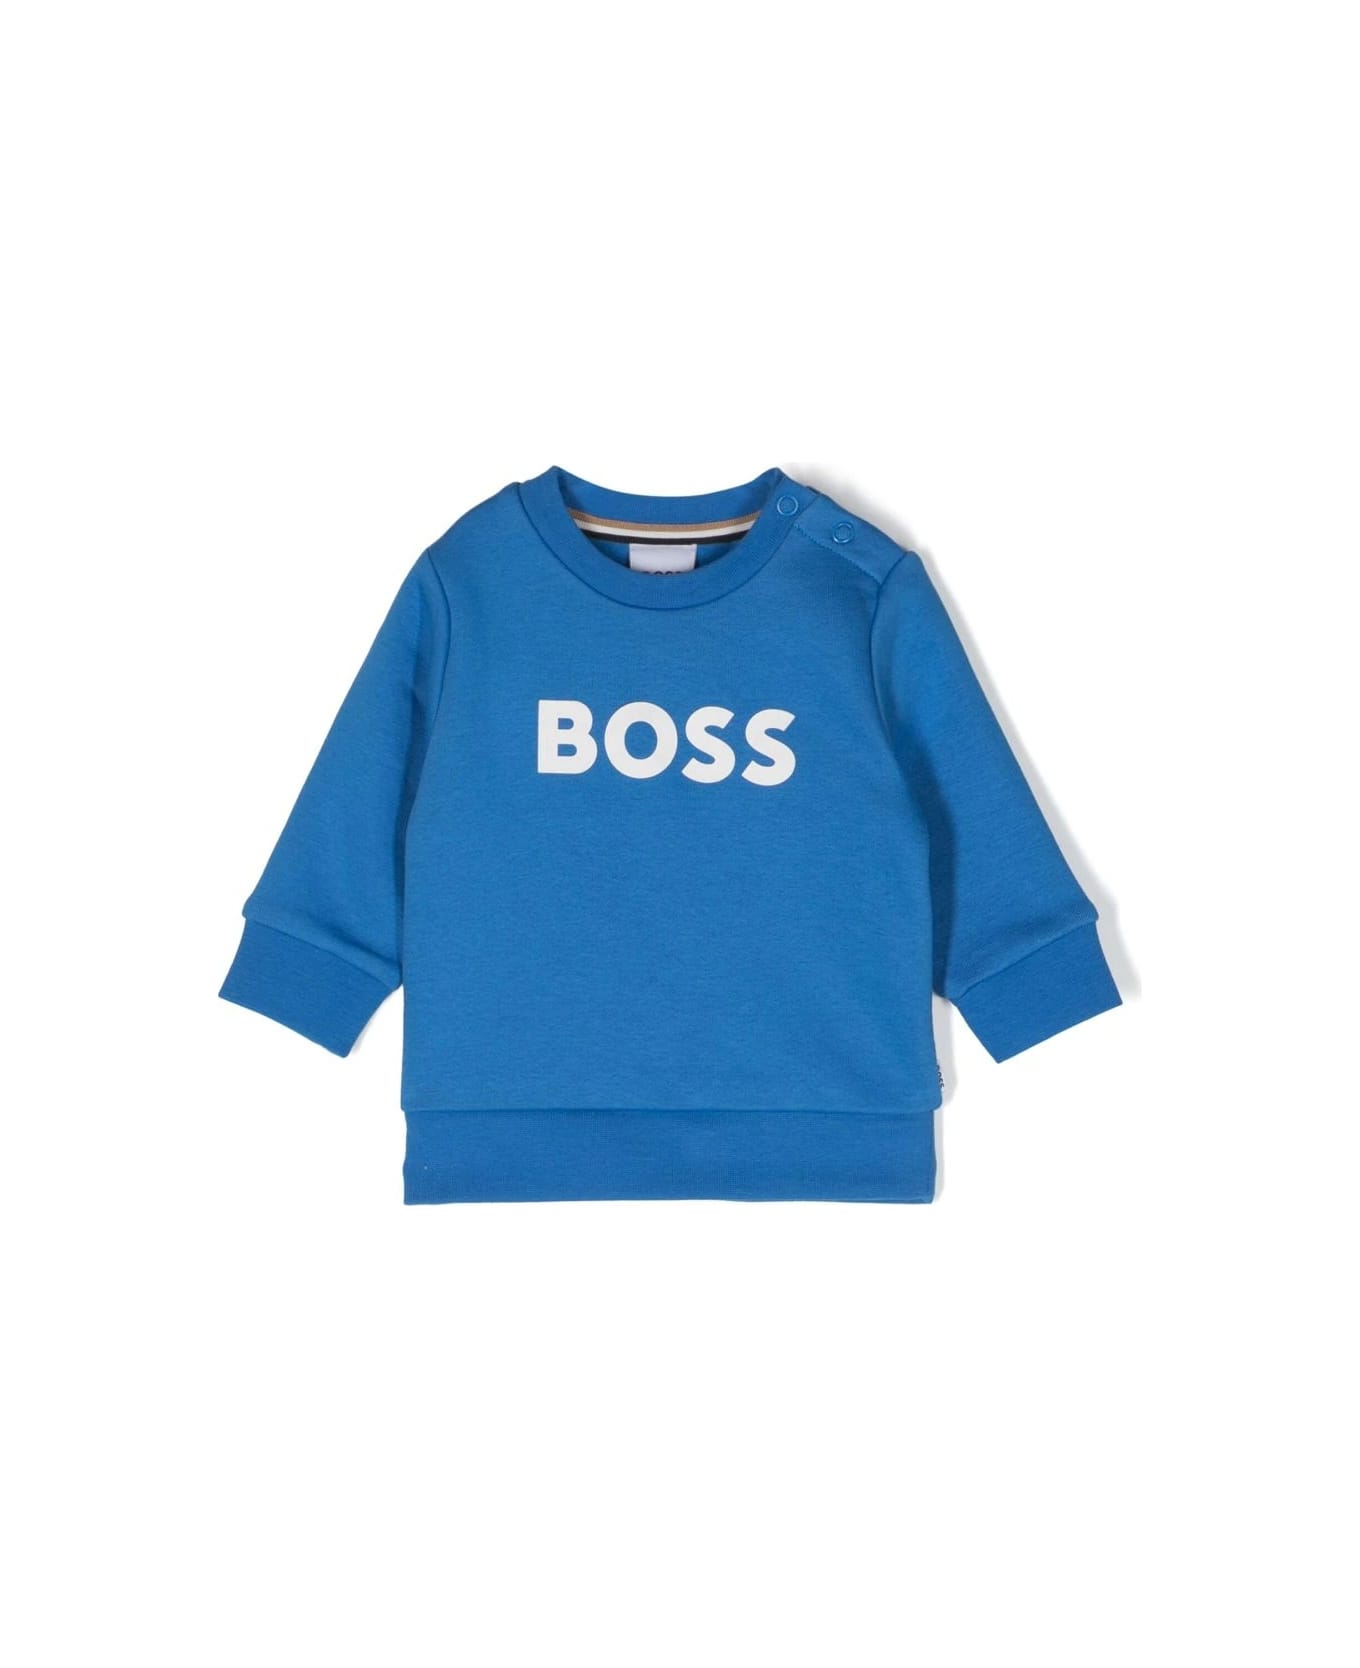 Hugo Boss Sweatshirt With Print - Blue